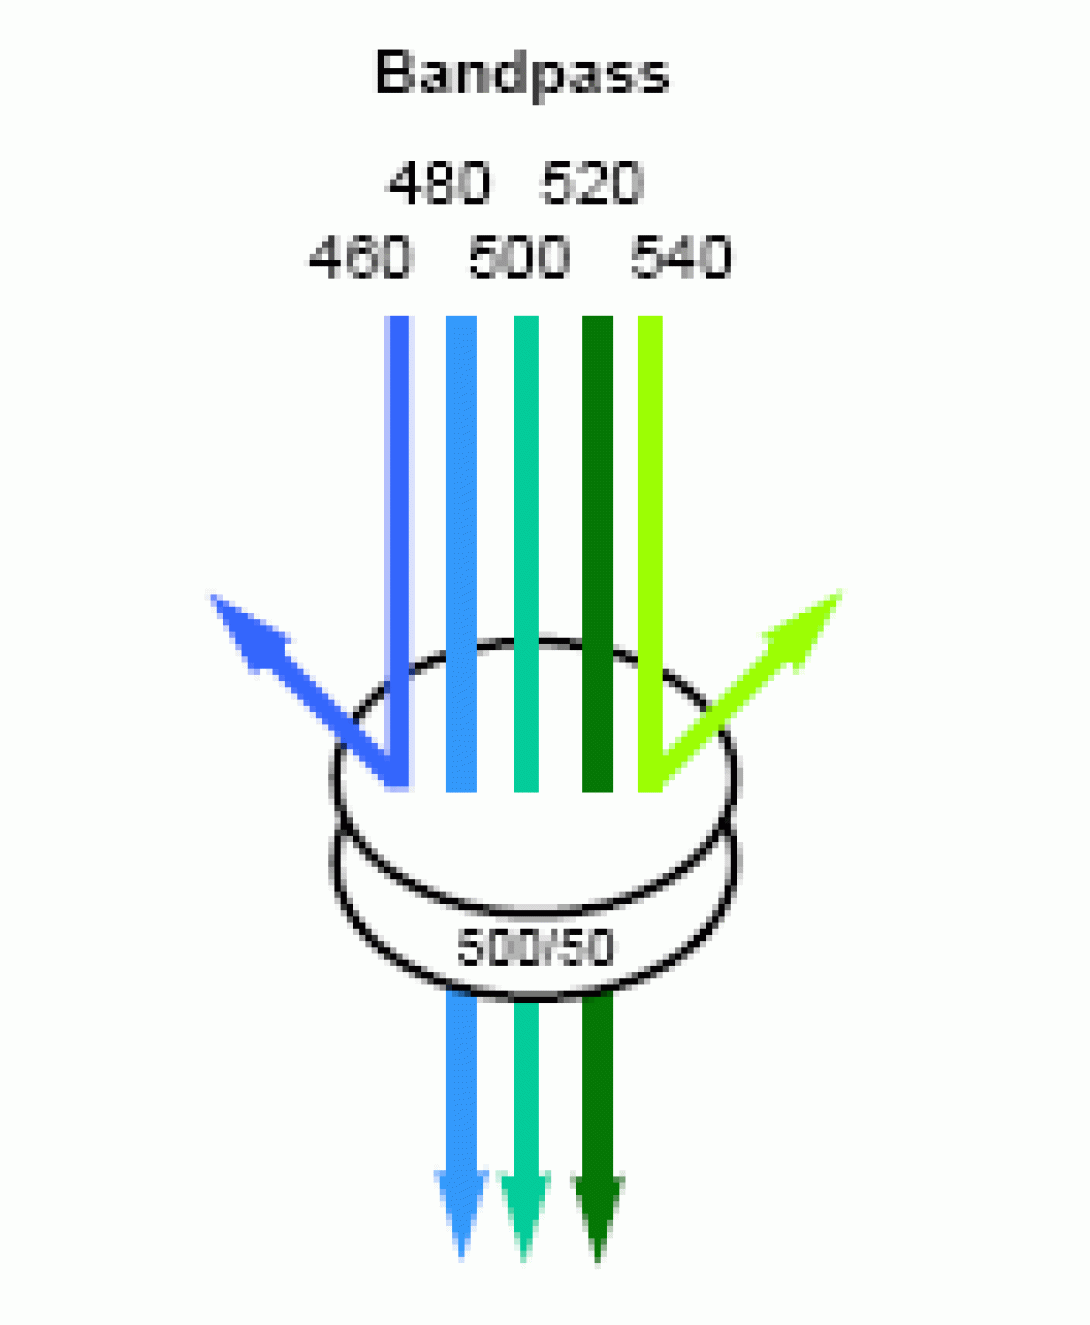 Flow Cytometry spectral overlap illustration